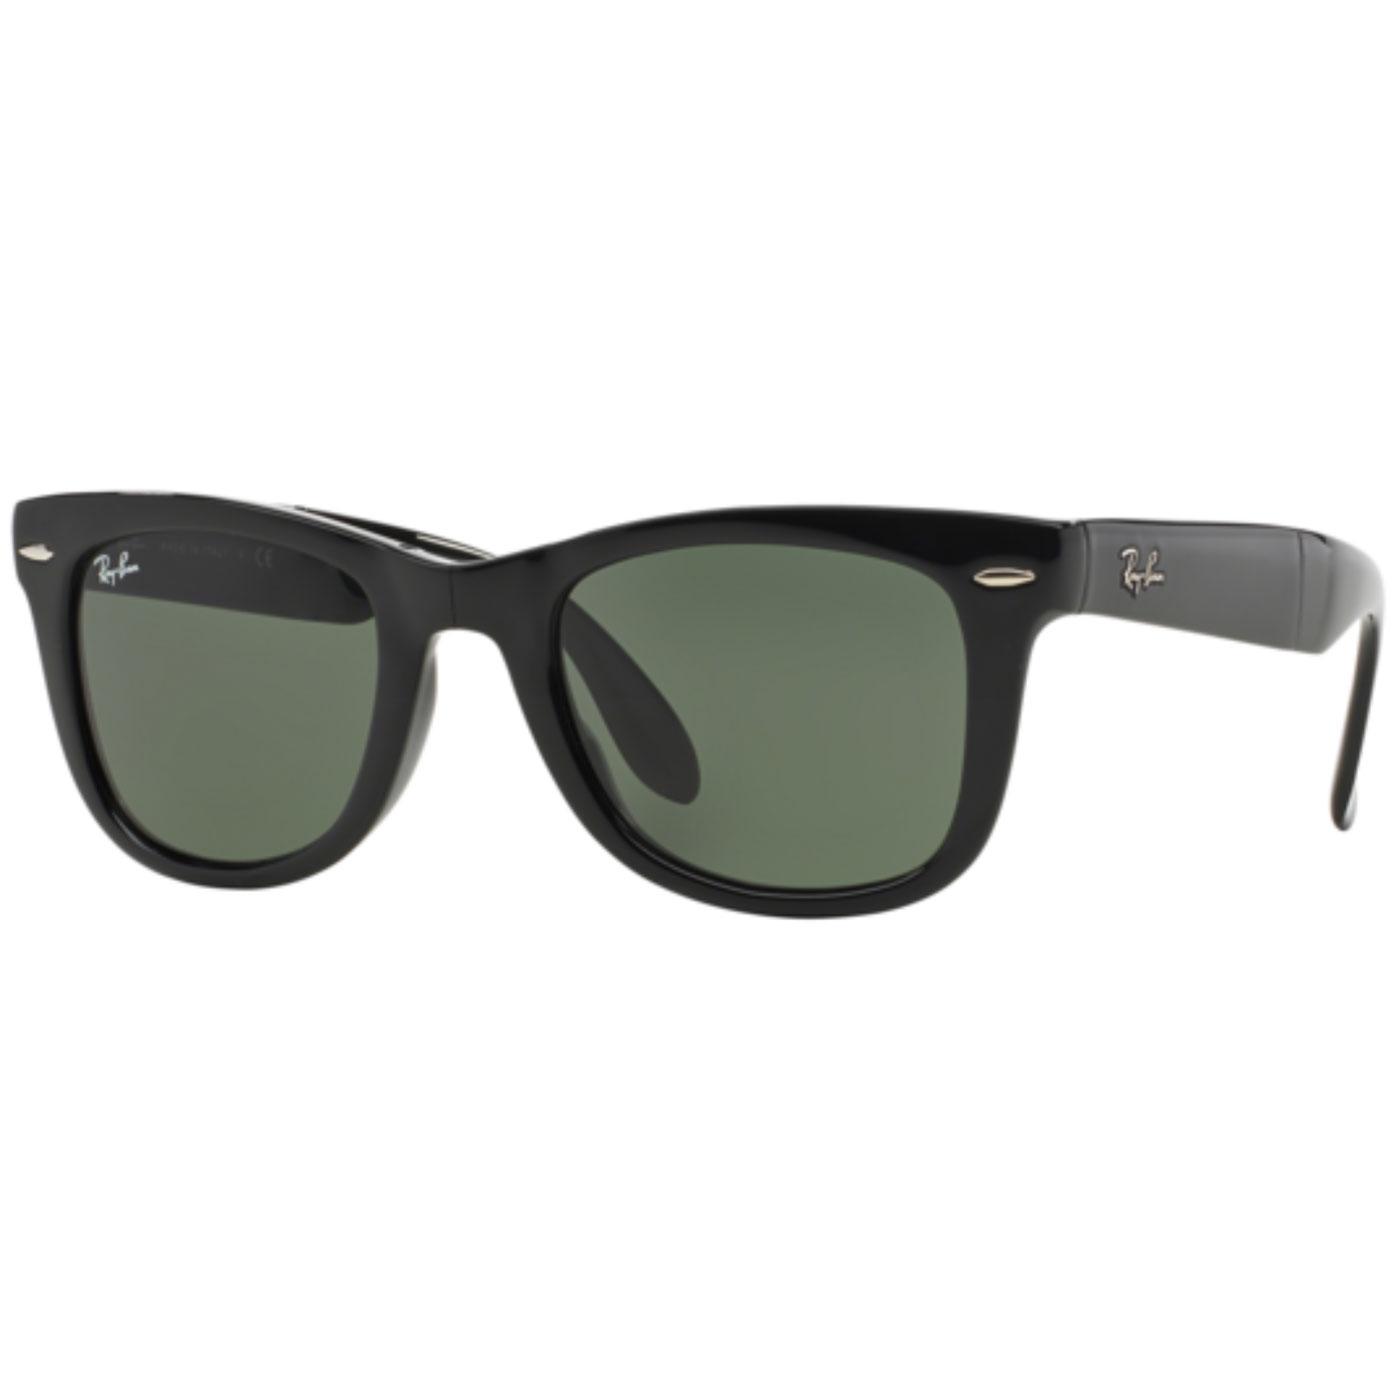 Ray-Ban 75th Anniversary Folding Wayfarer Sunglasses in Black